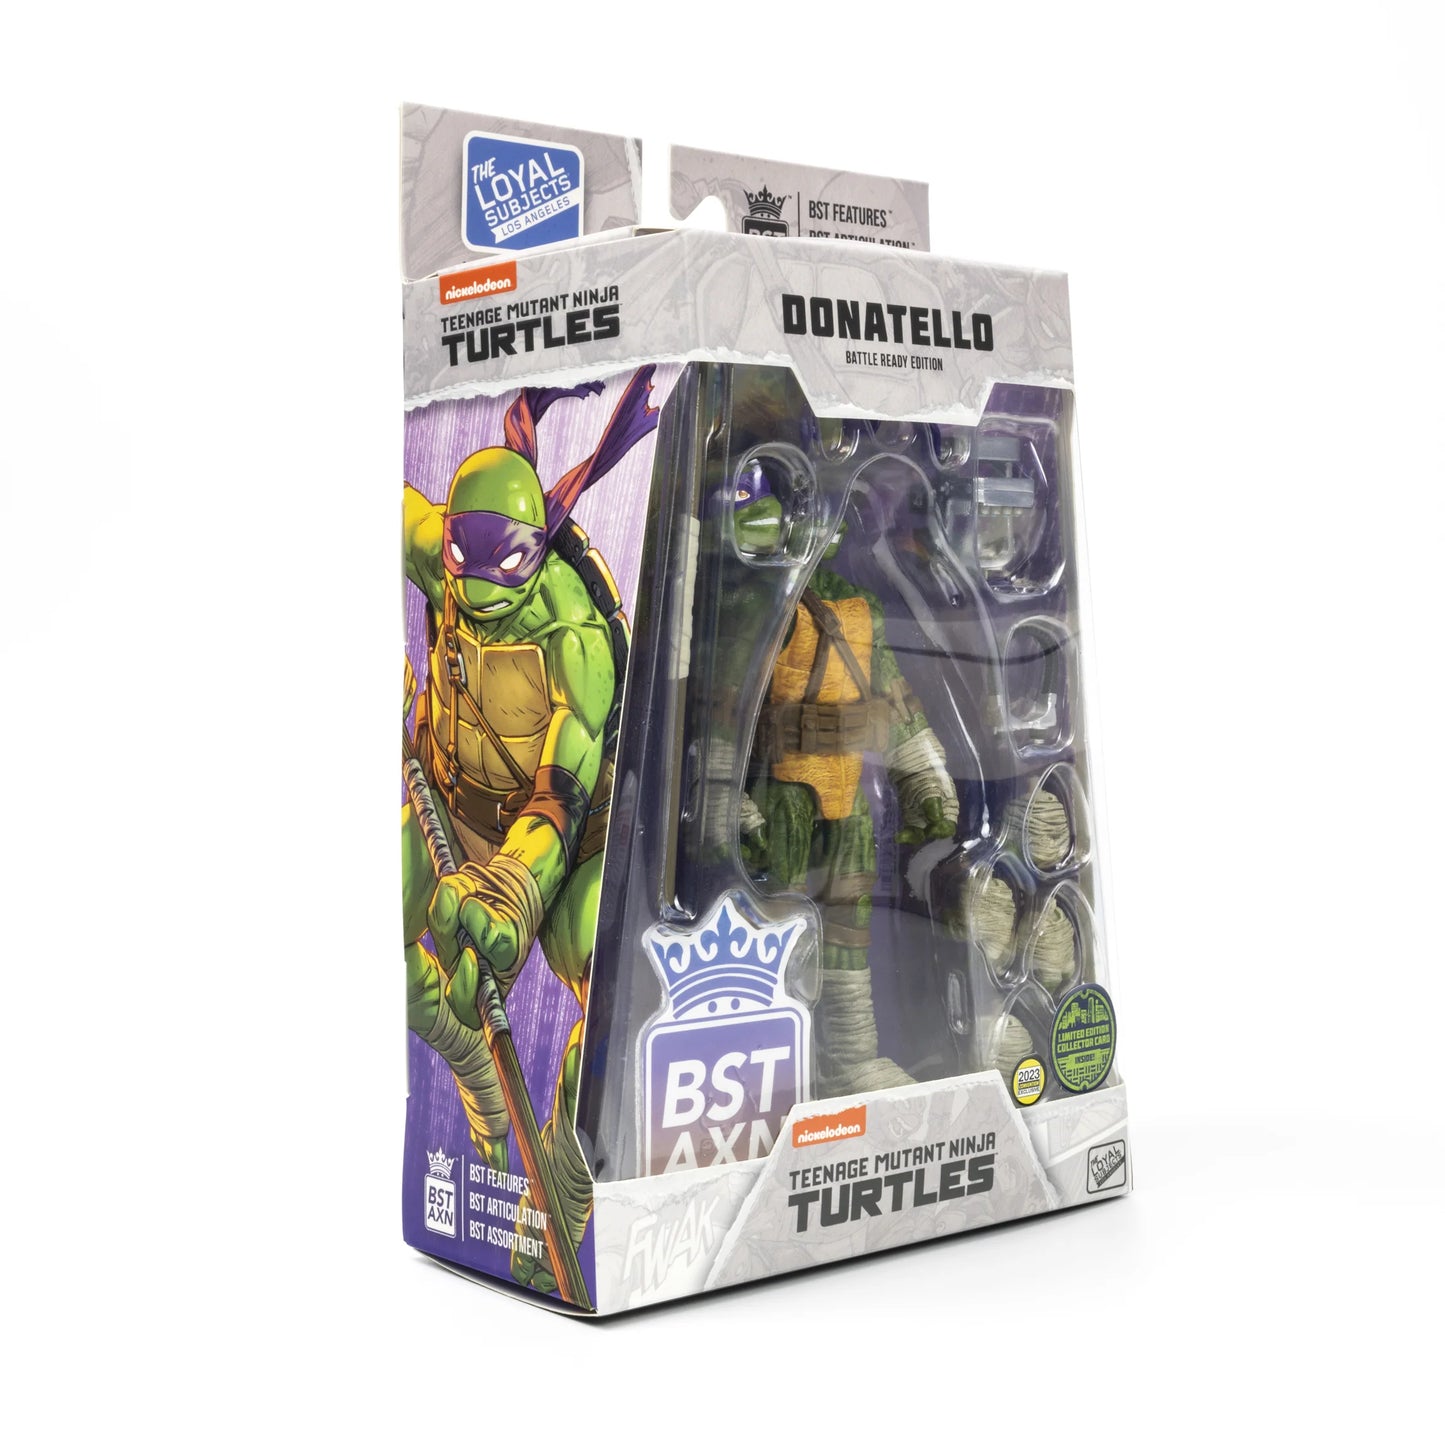 Donatello “Battle Ready” - BST AXN SDCC 2023